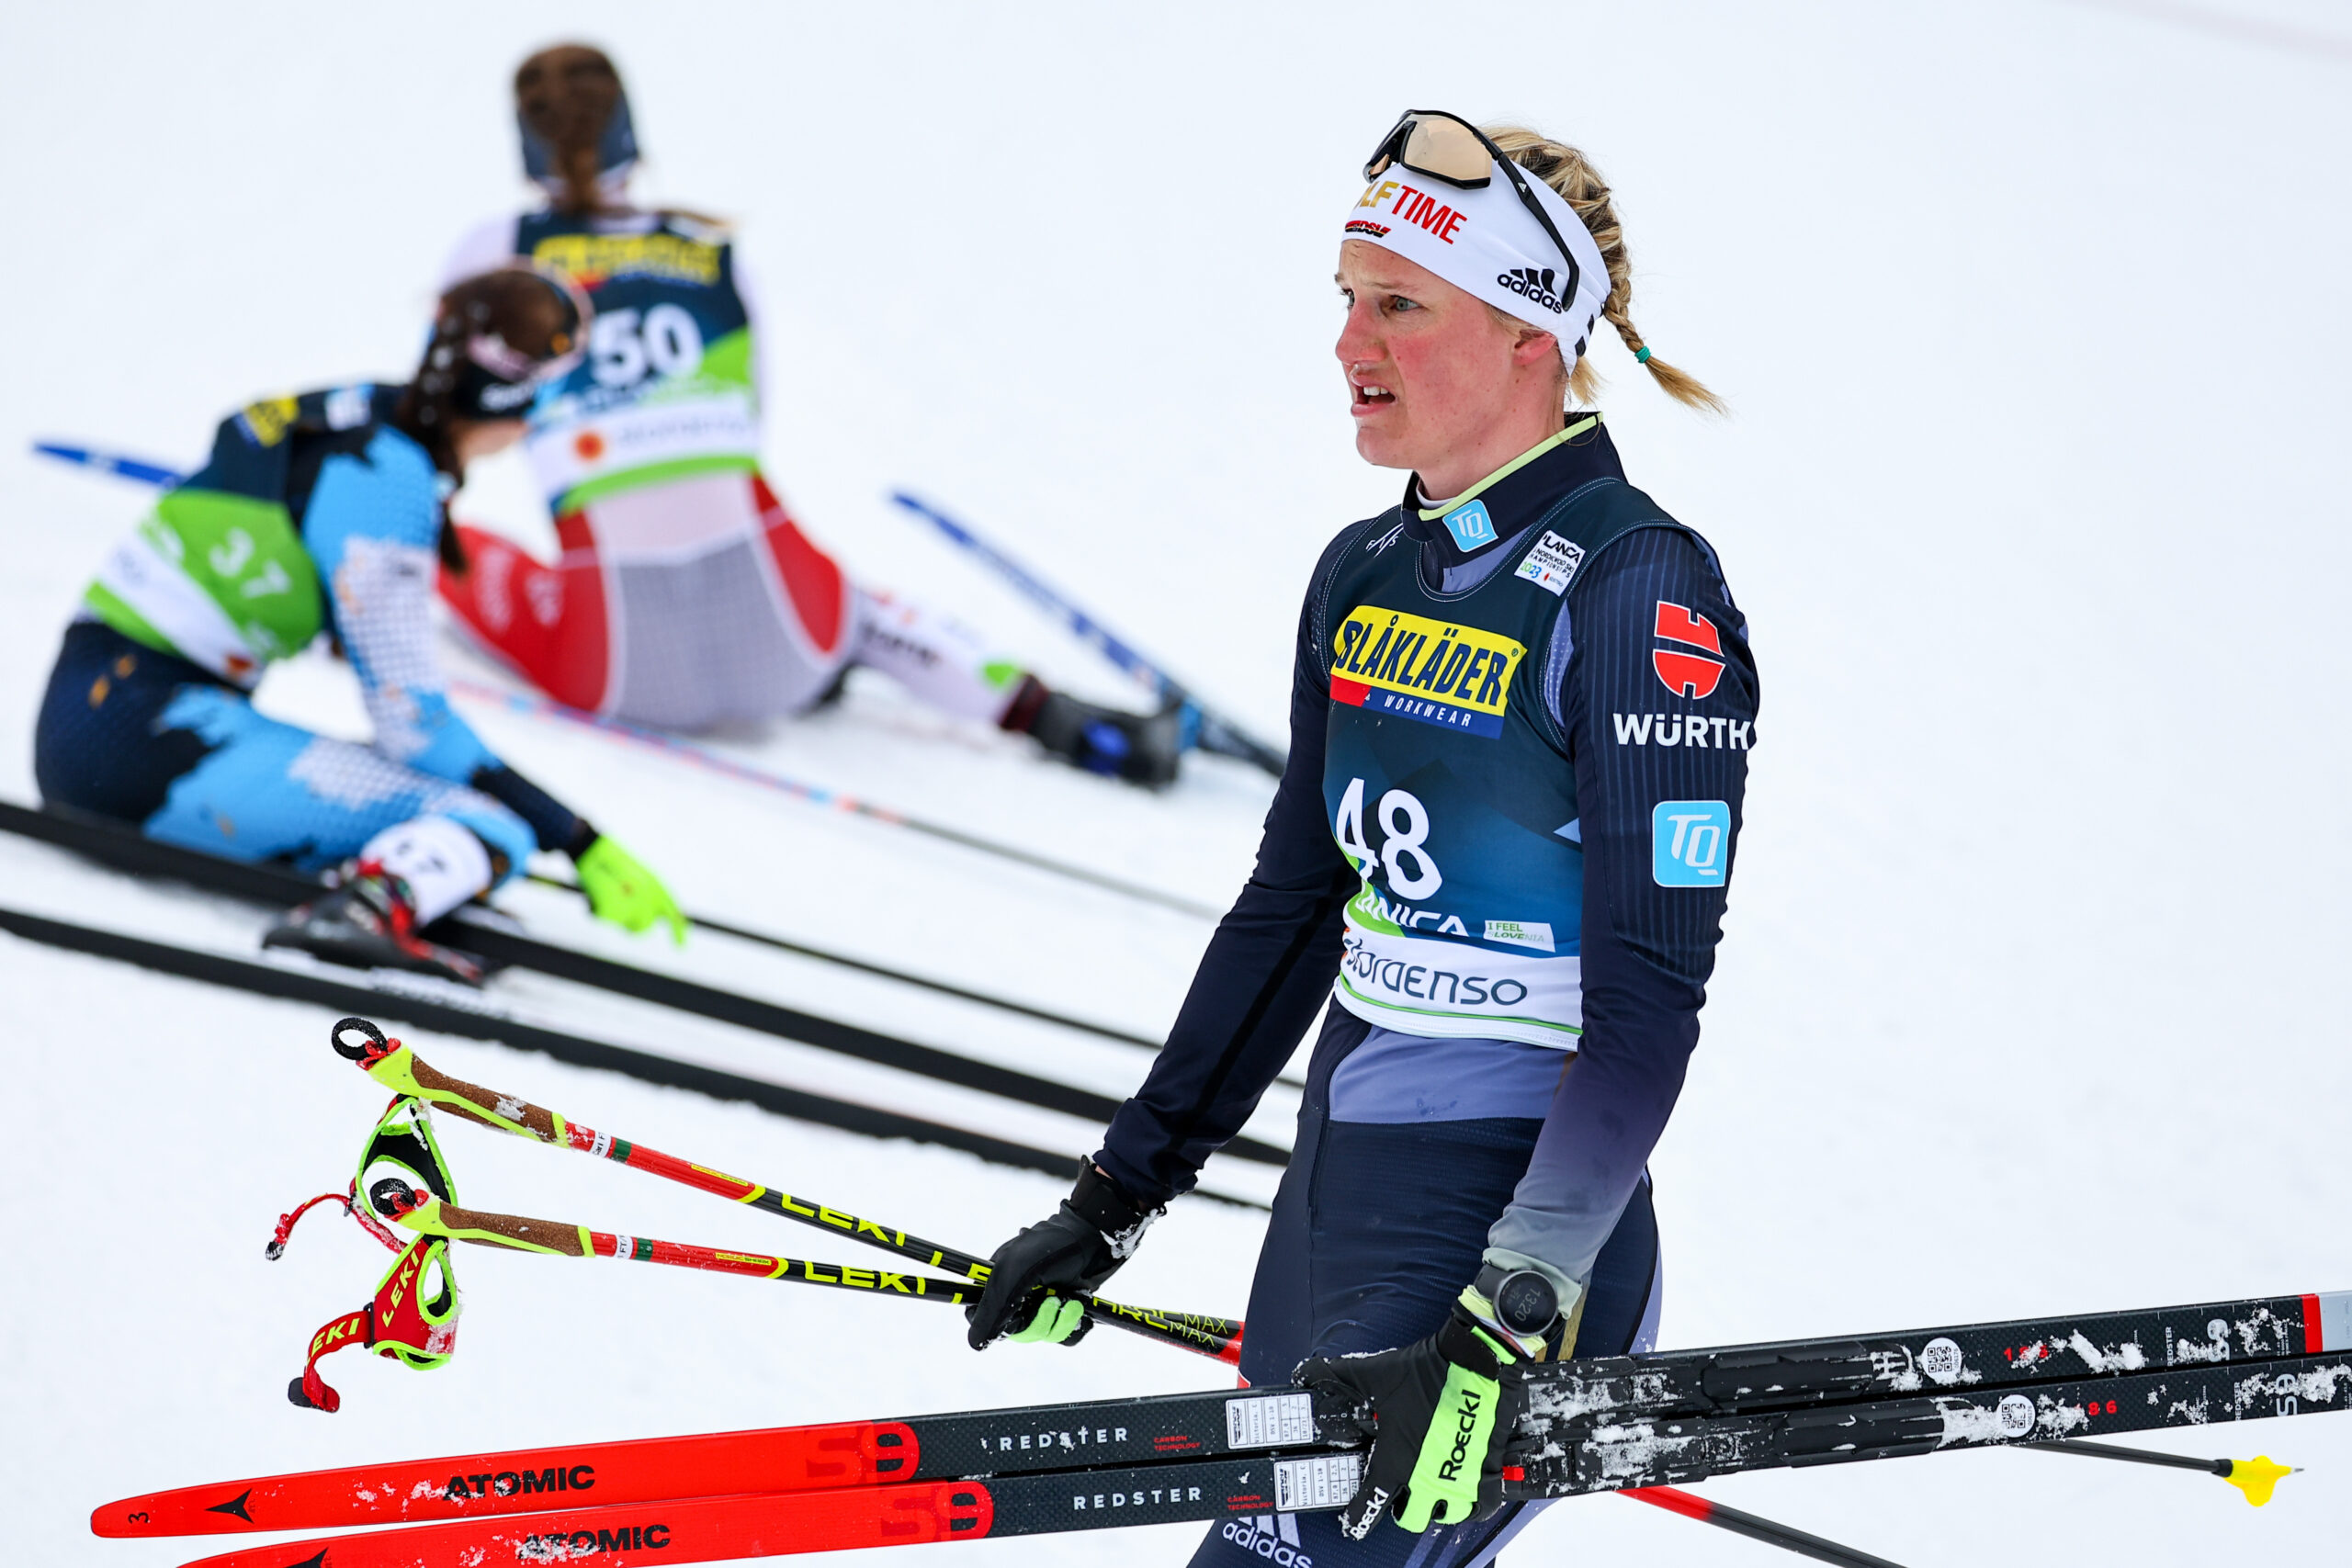 Skilanglauf-Olympiasiegerin Victoria Carl